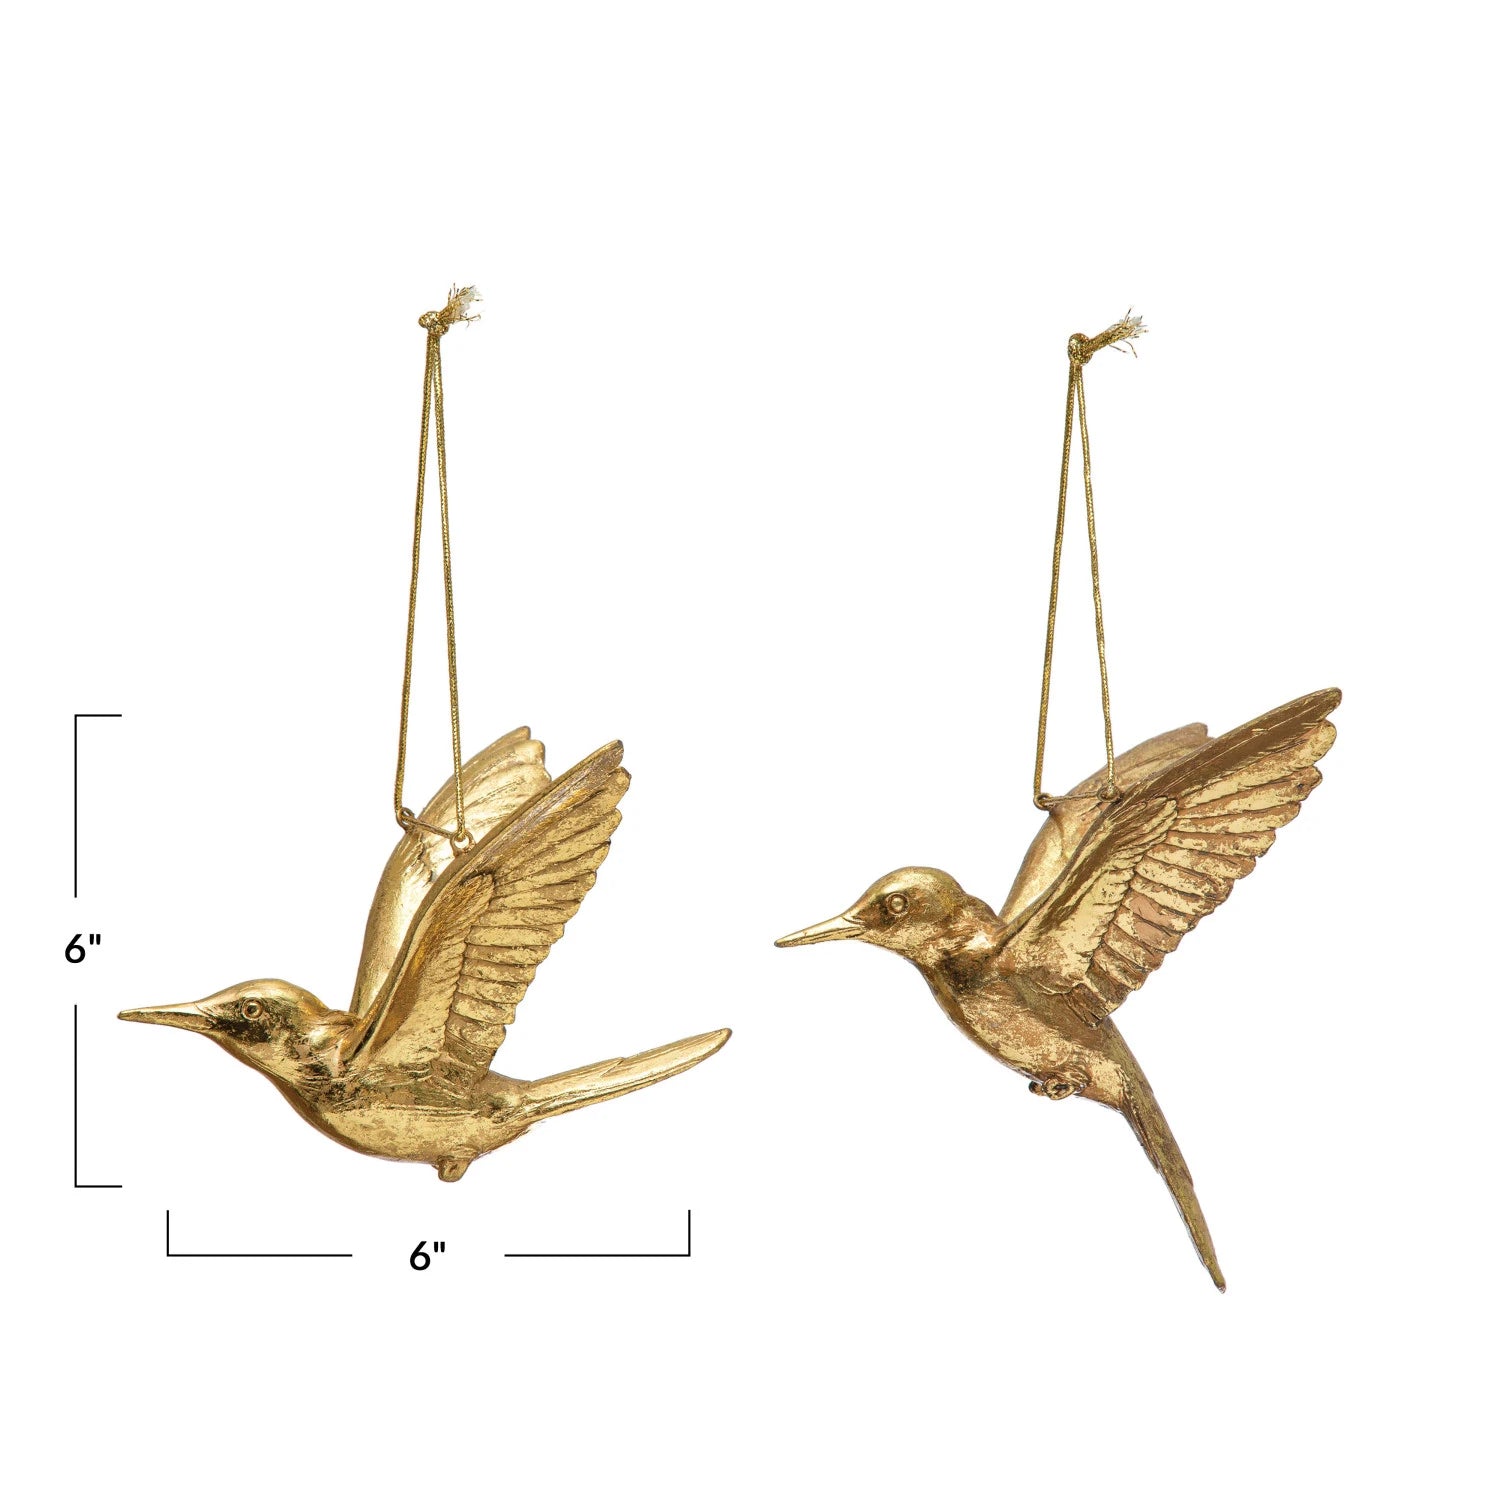 Measurements of the unique gold finish resin hummingbird ornaments. 